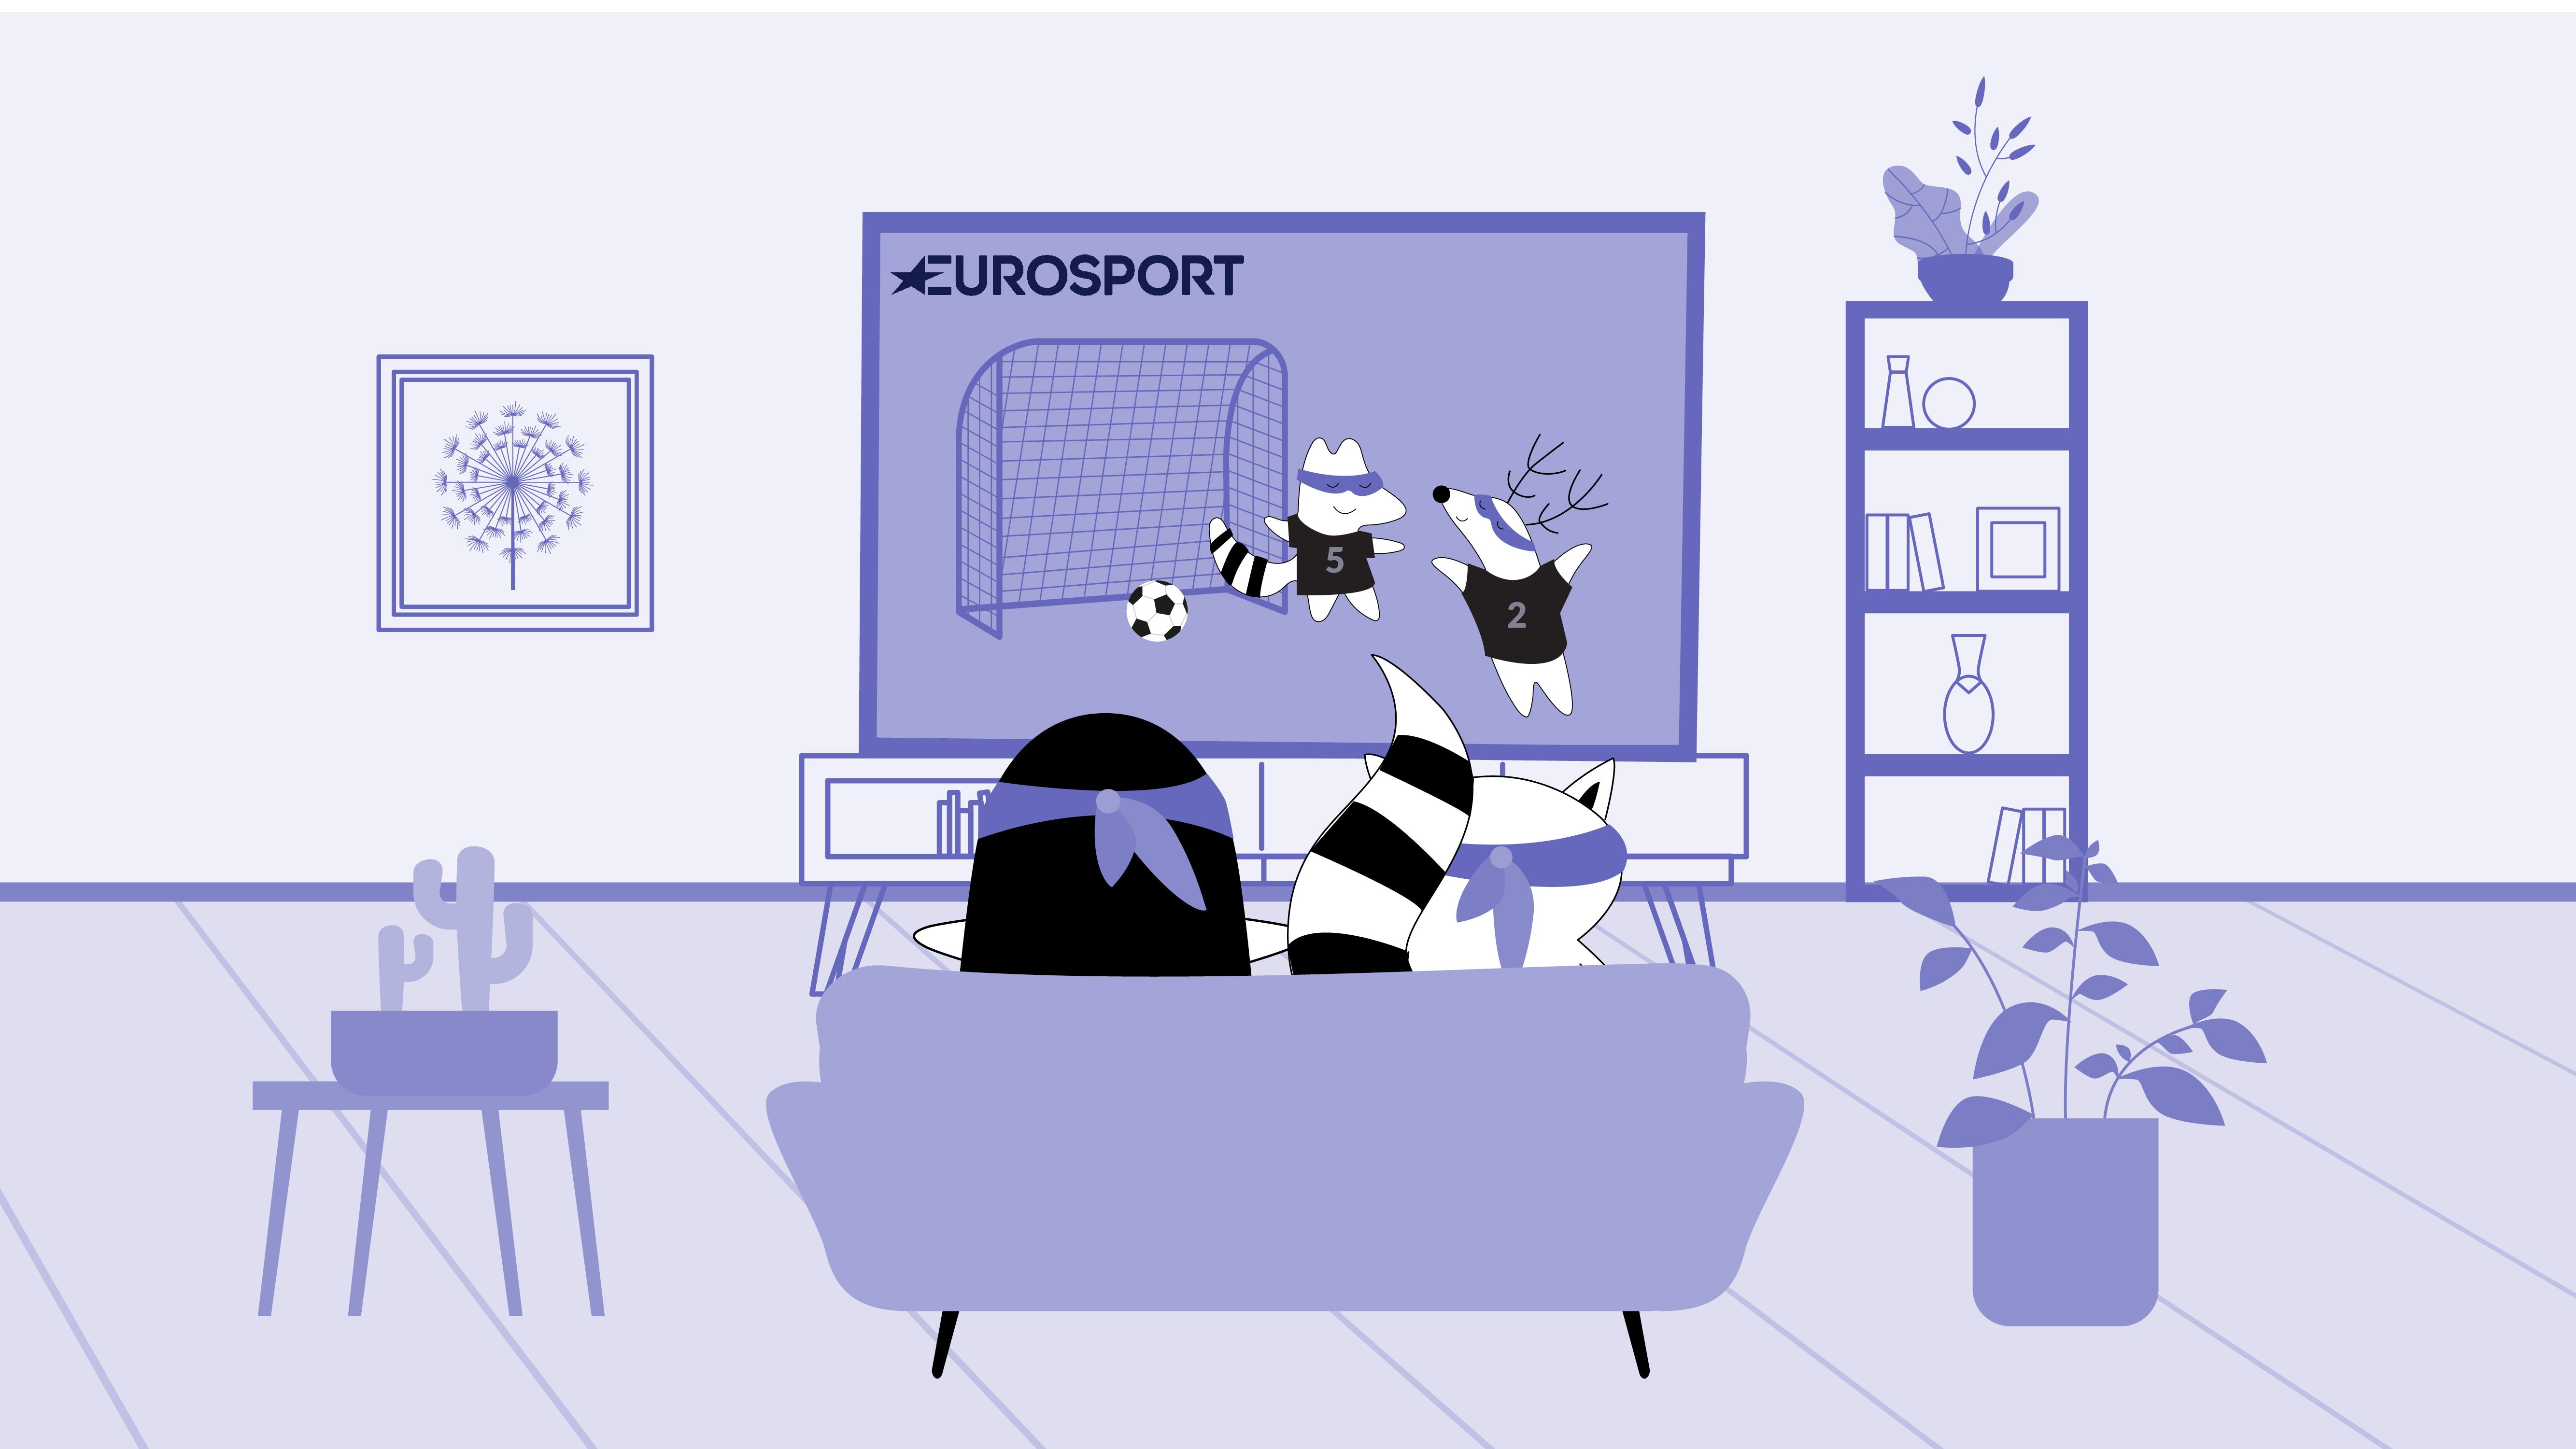  Benji and Pocky watch a football game on Eurosport.